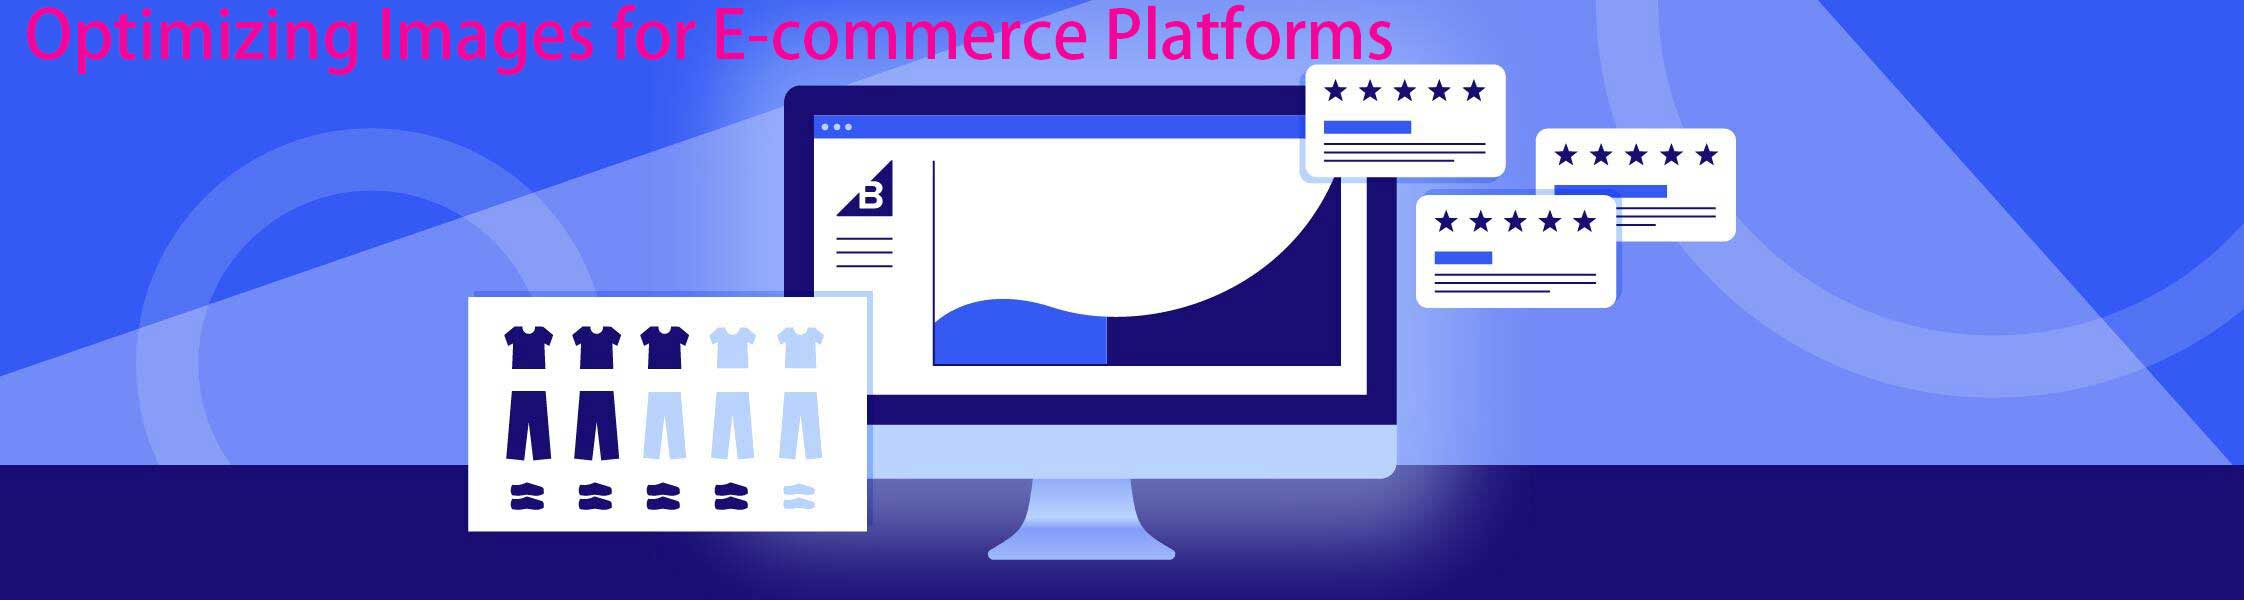 Optimizing-Images-for-E-commerce-Platforms